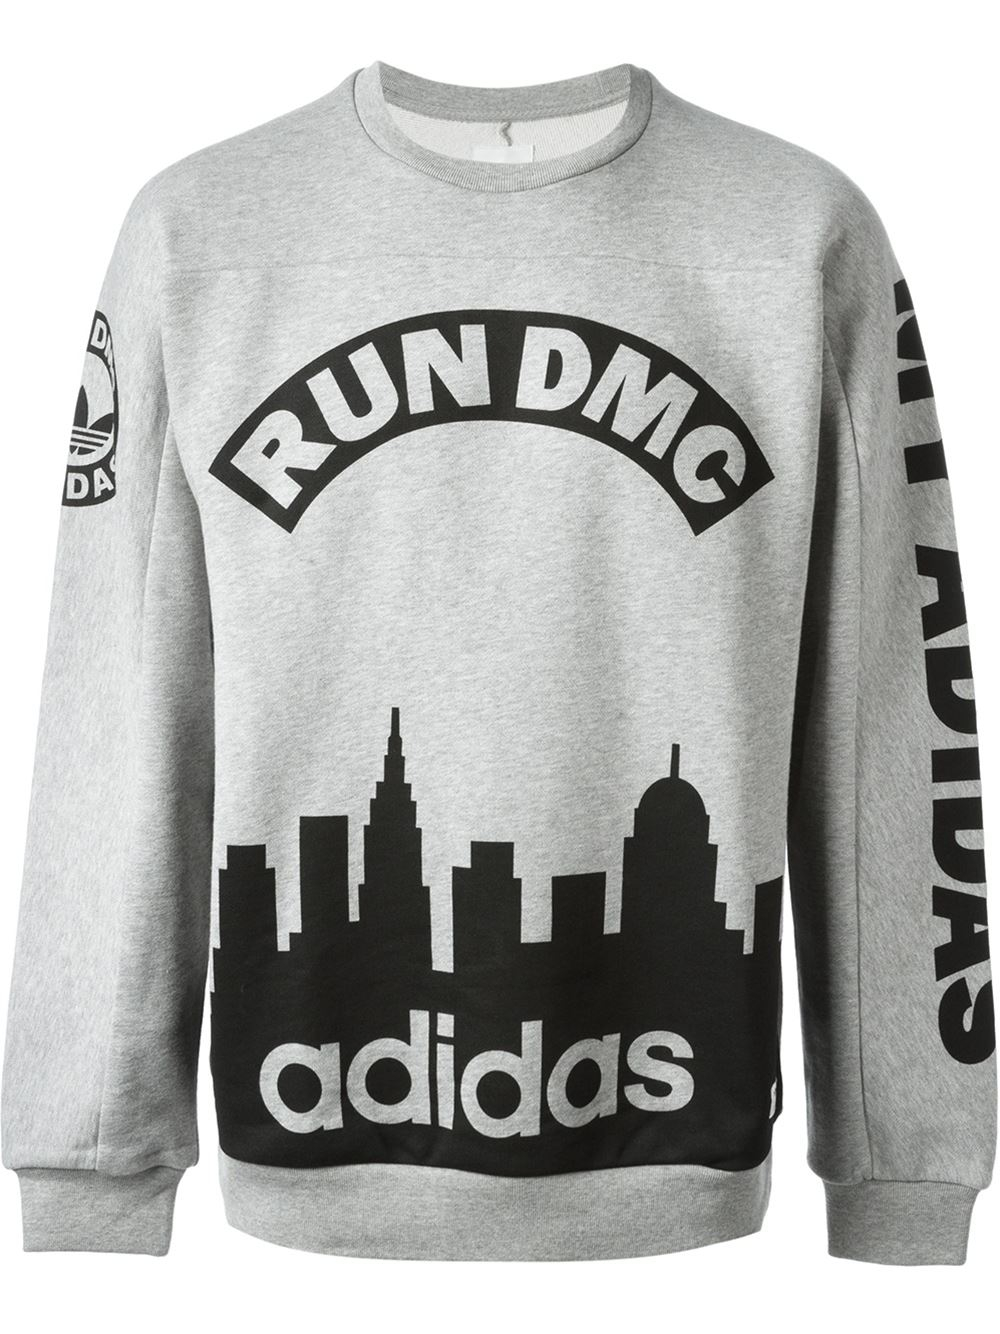 adidas Run Dmc Sweatshirt in Grey (Gray) for Men - Lyst